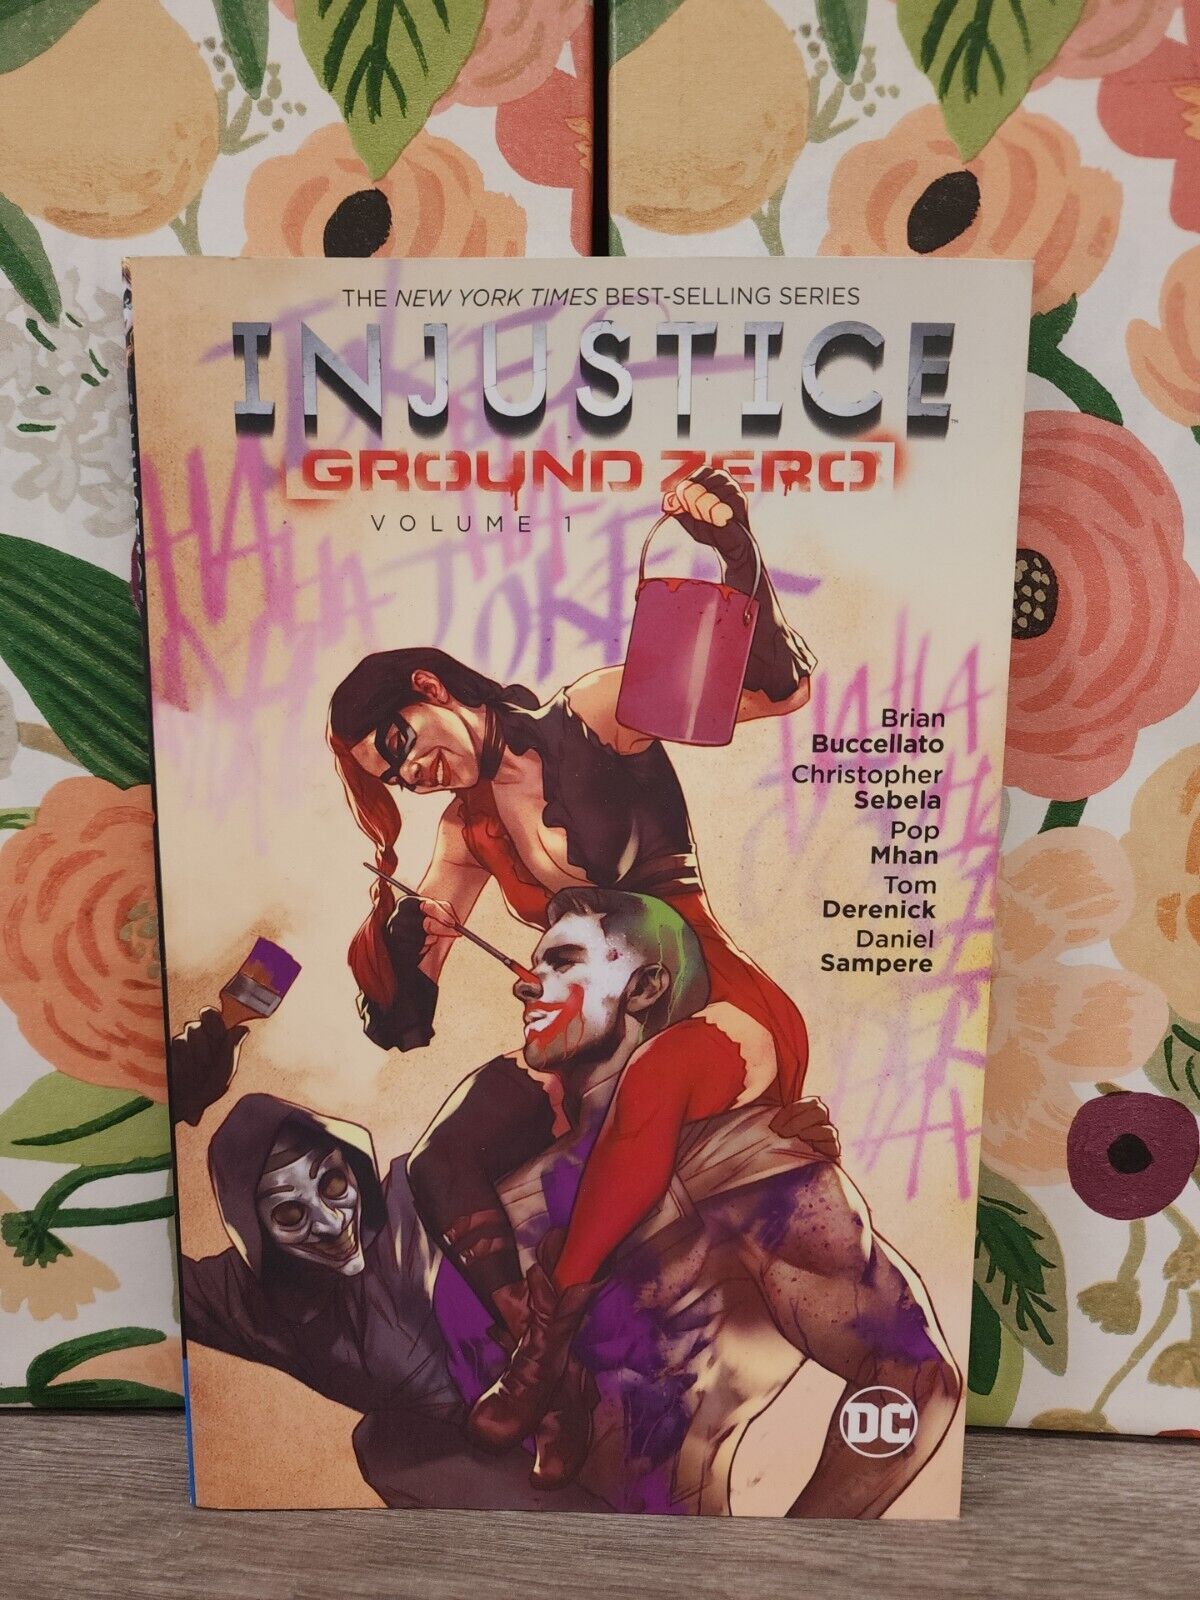 Injustice: Ground Zero Vol. 1 (Paperback) DC Comics